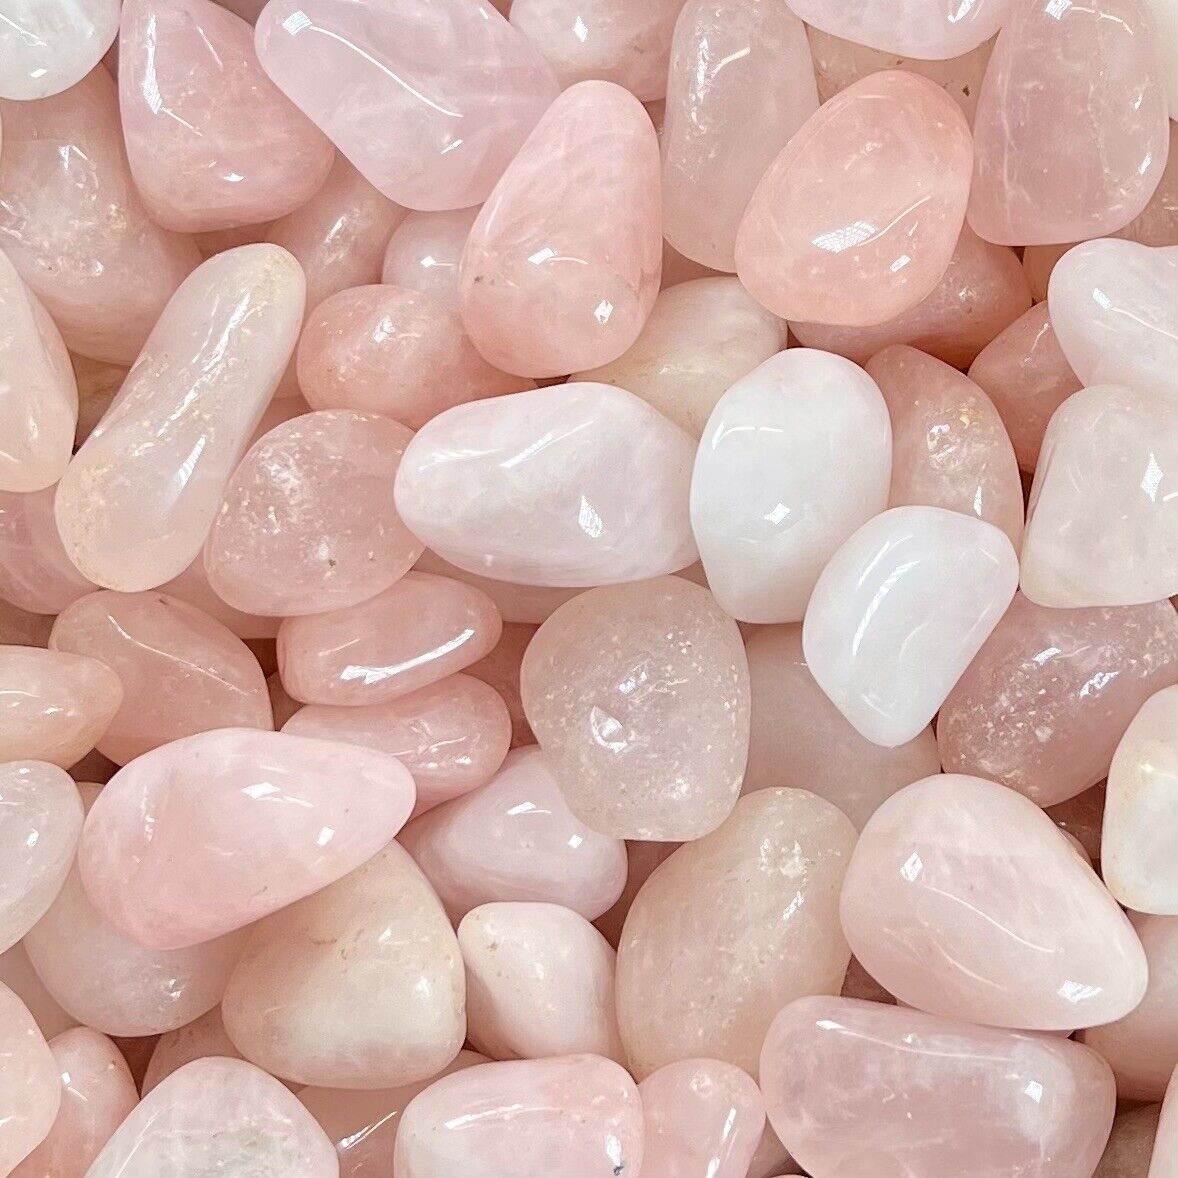 3lb JUMBO Bulk Rose Quartz Lot - Tumbled Stones - Healing and Reiki Crystals